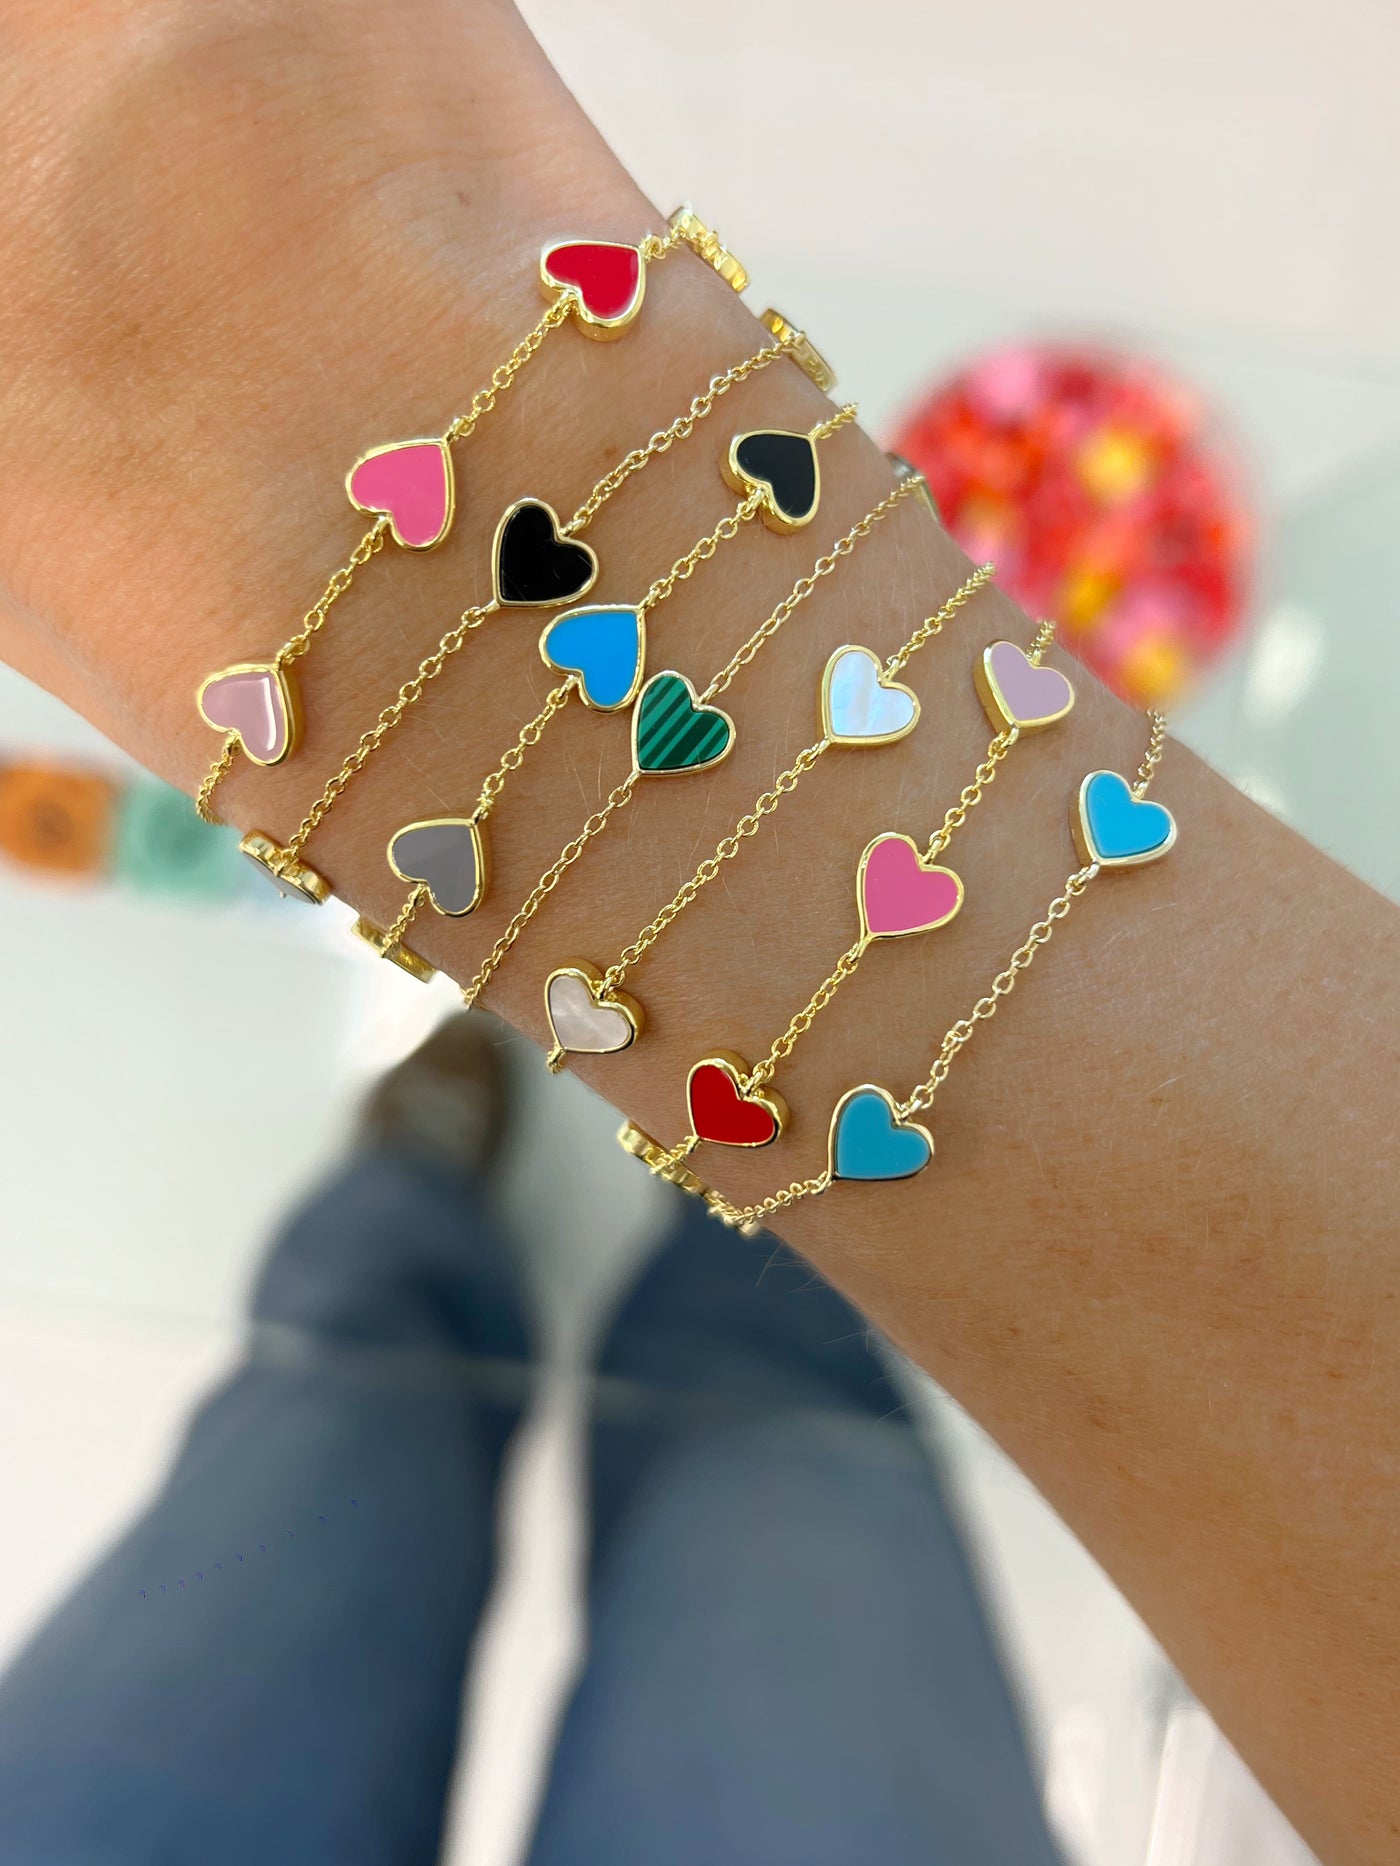 Colourful heart bracelet